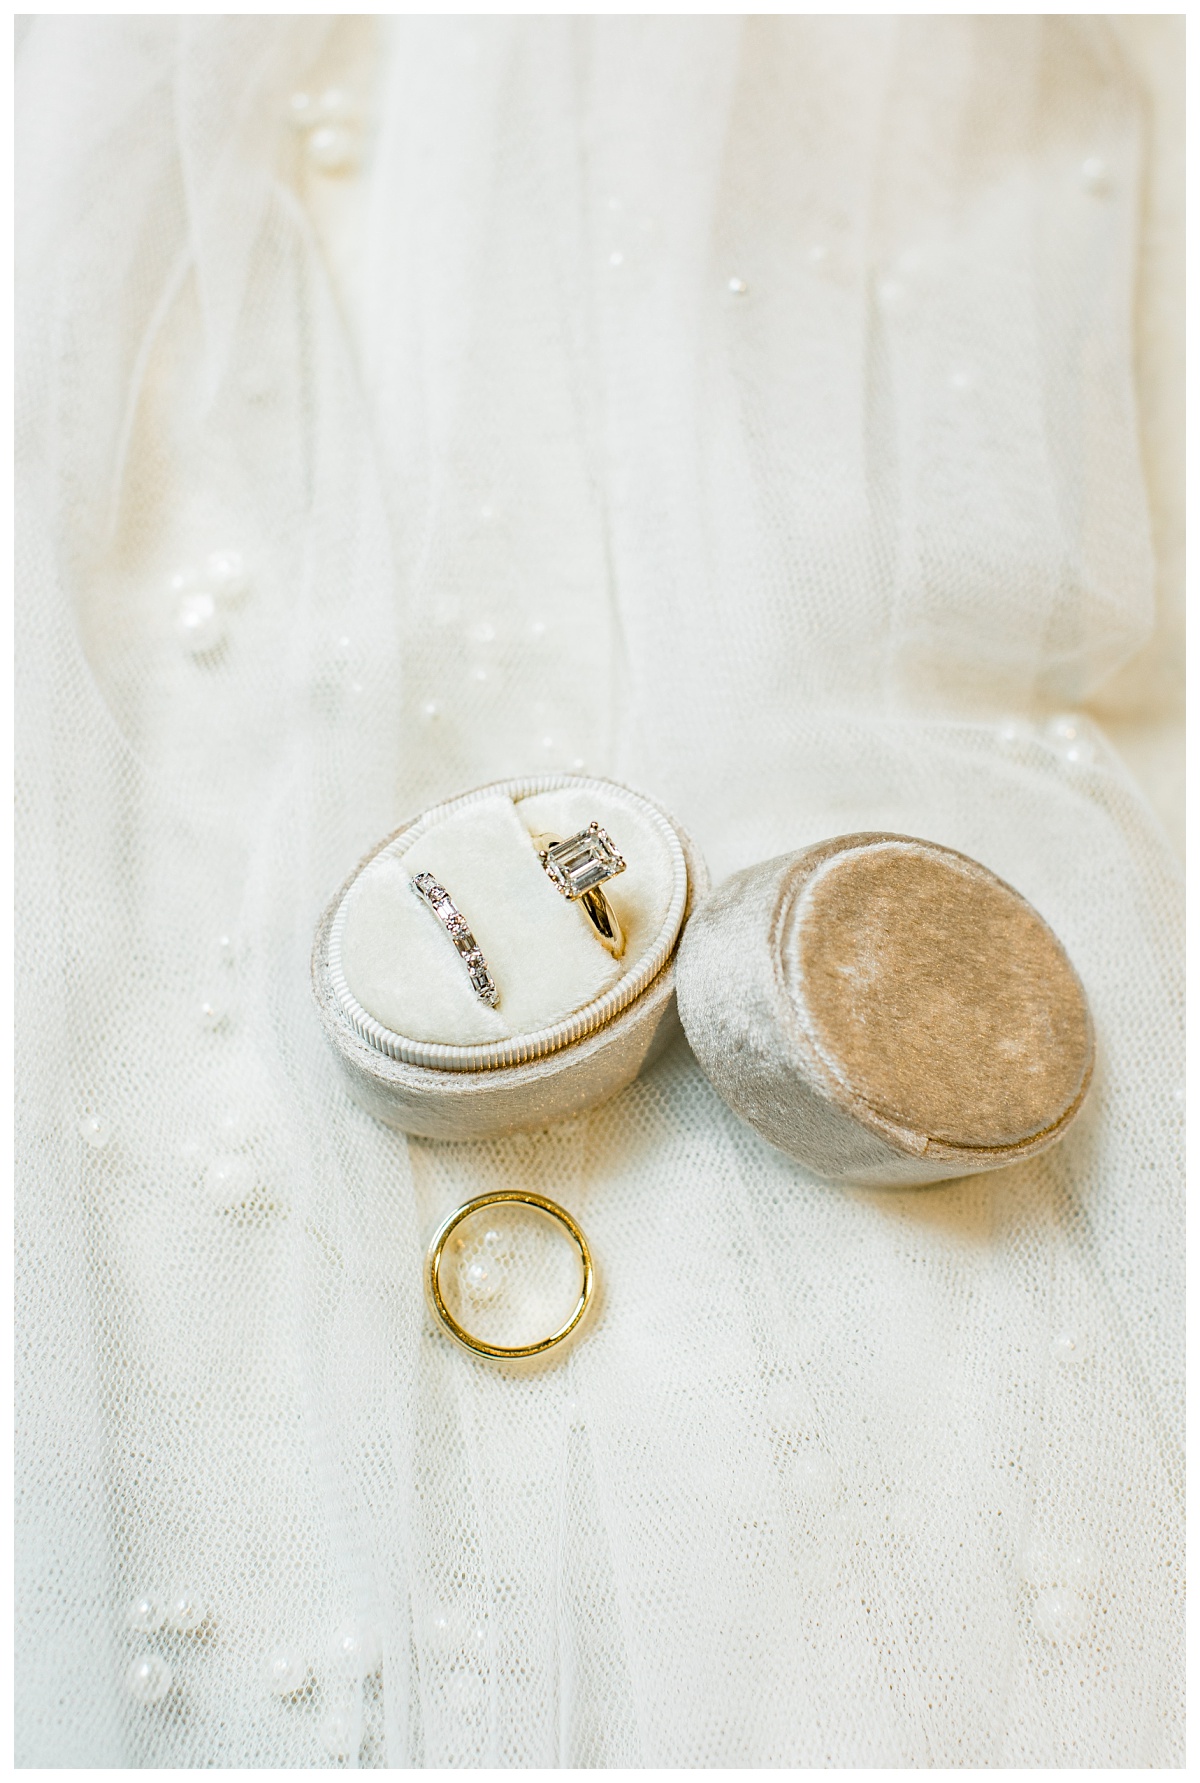 Wedding rings inside ring box on pearl veil